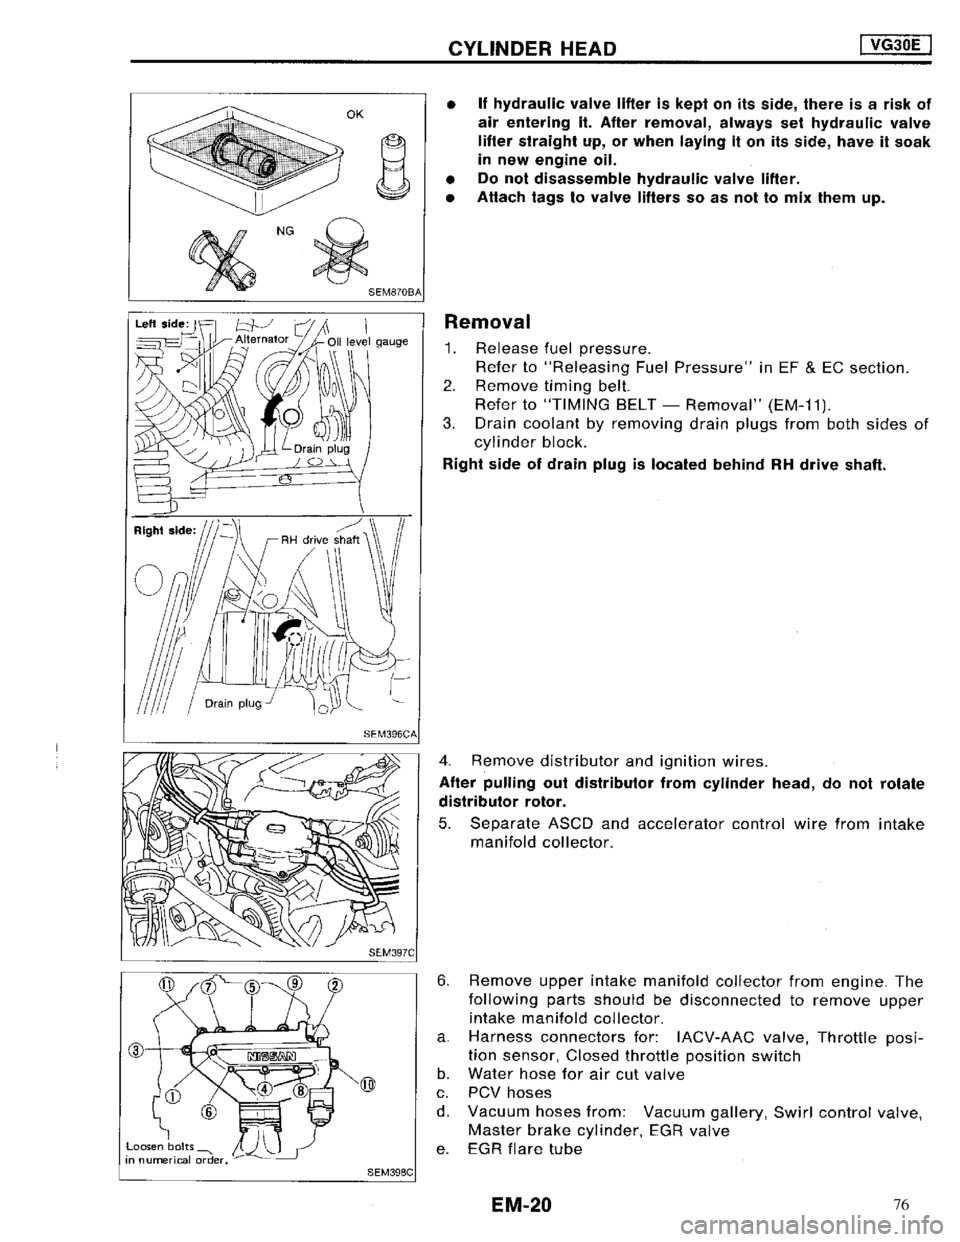 NISSAN MAXIMA 1994 A32 / 4.G Engine Mechanical User Guide 76 